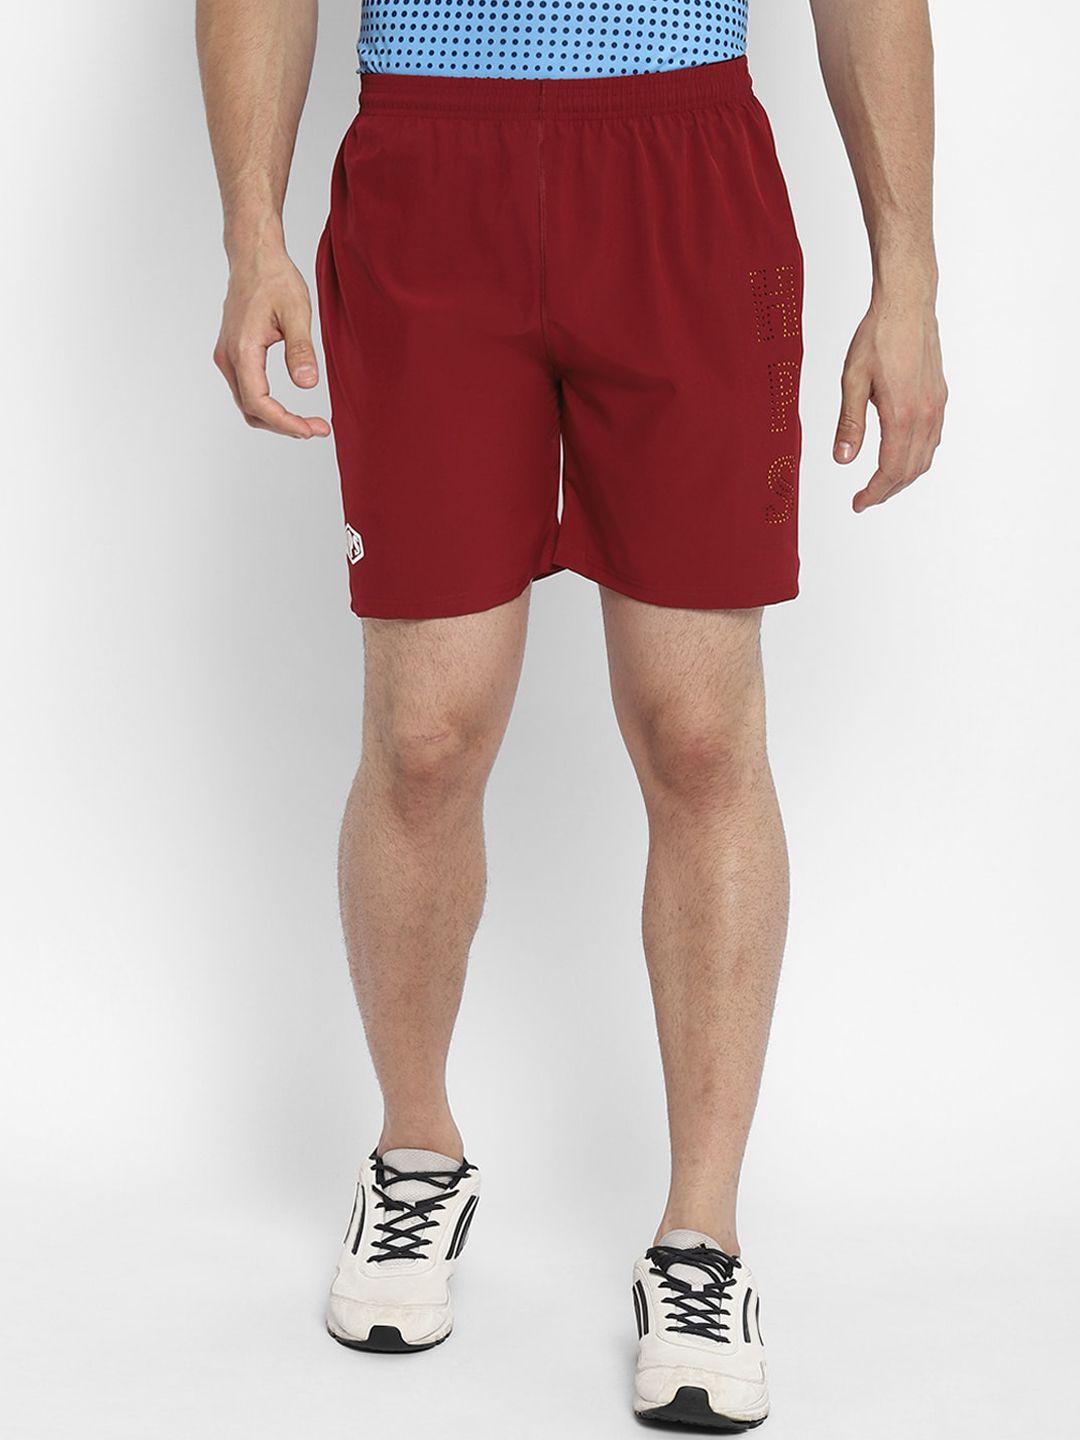 hps sports men red running sports shorts